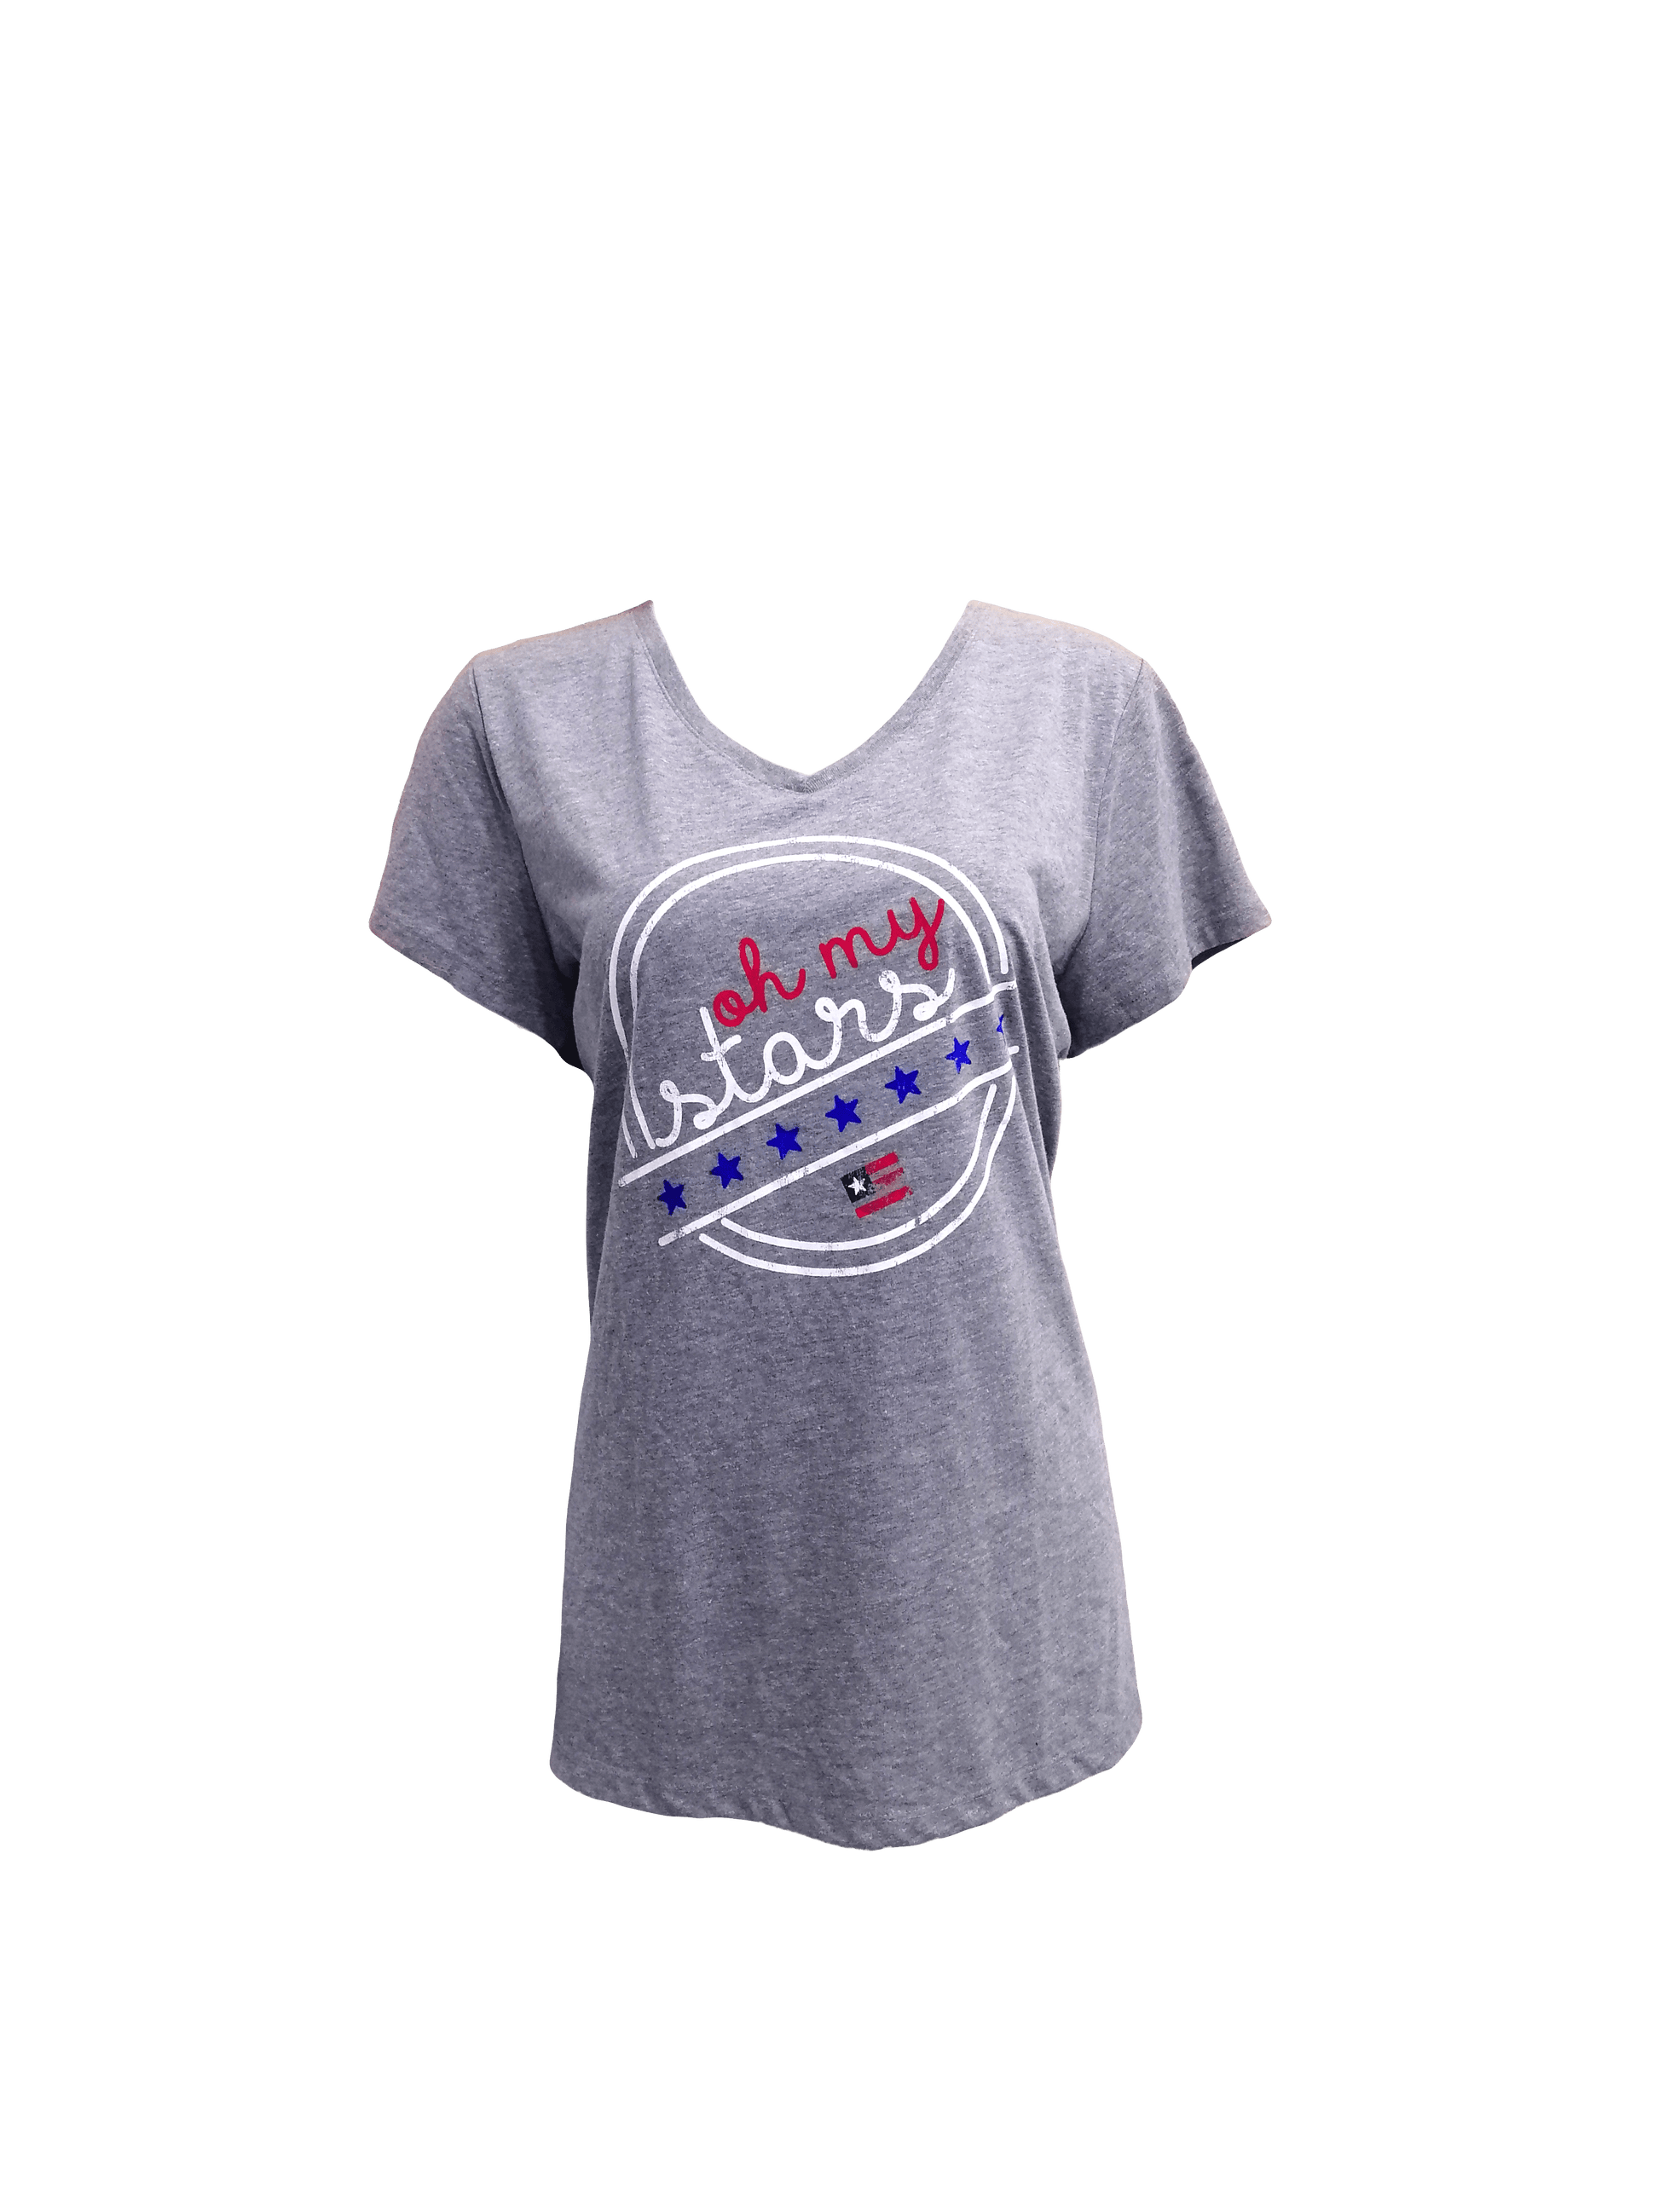 ARIZONA JEAN CO Womens Tops L Short Sleeve T-Shirt